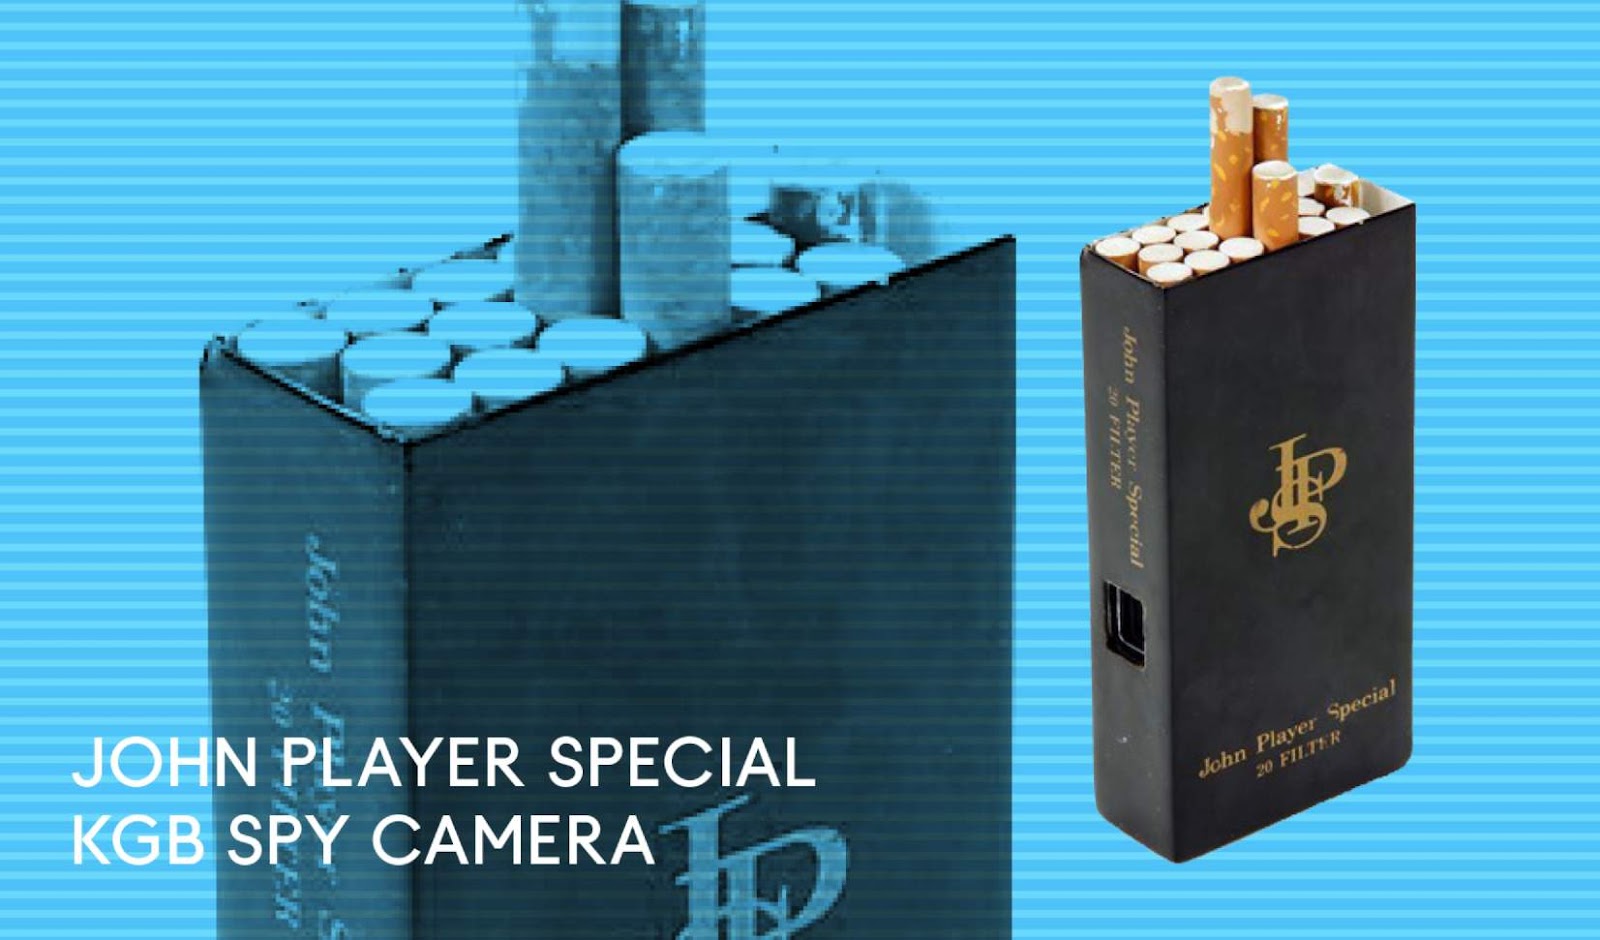 KGB Cigarette package hiding a camera